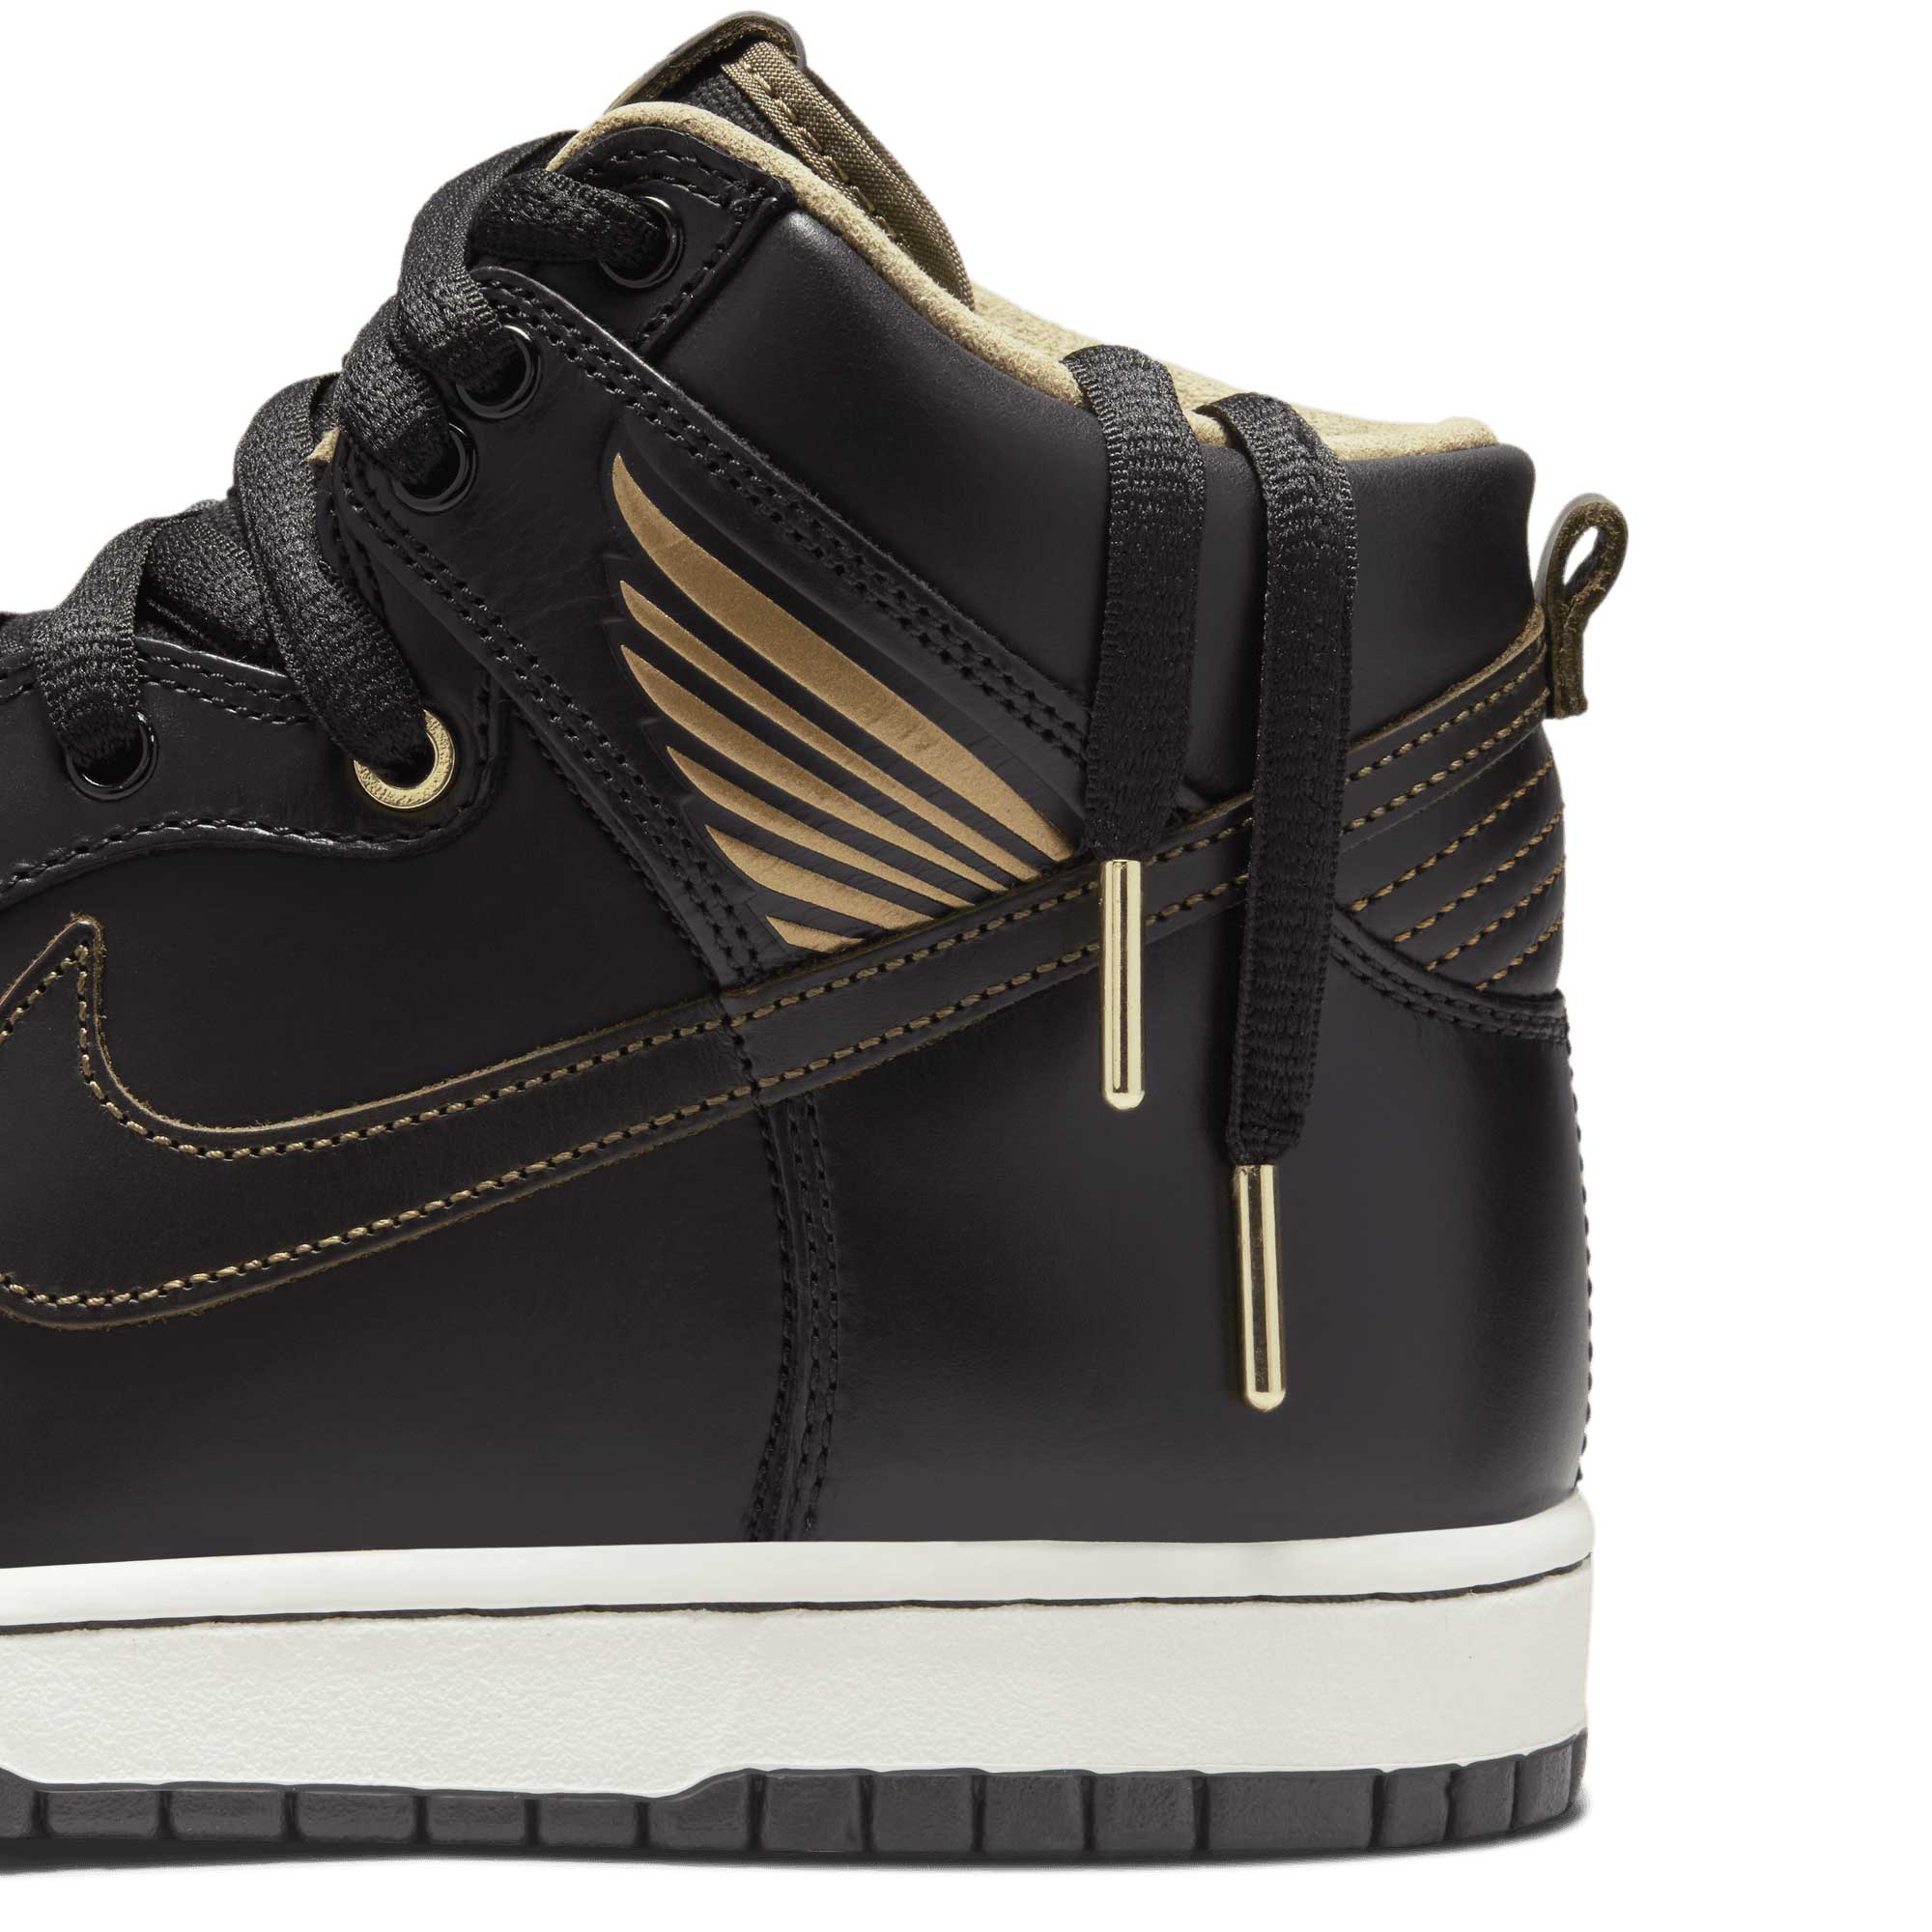 Nike SB Dunk High OG Pawnshop QS, black/black-metallic gold